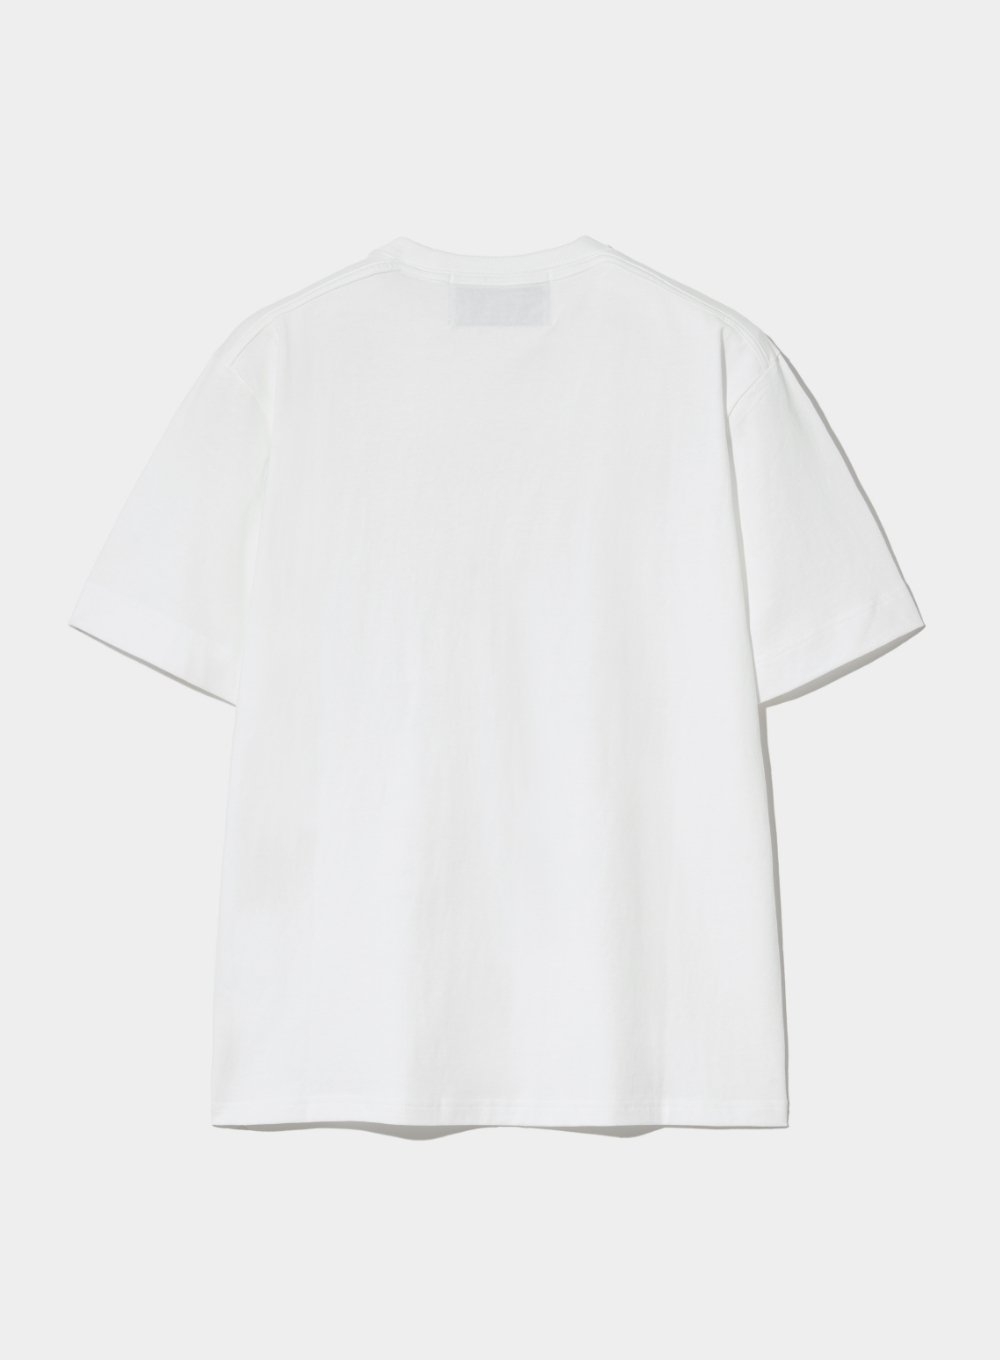 Classy Nostalgia Vintage Graphic T-Shirt - Clean White